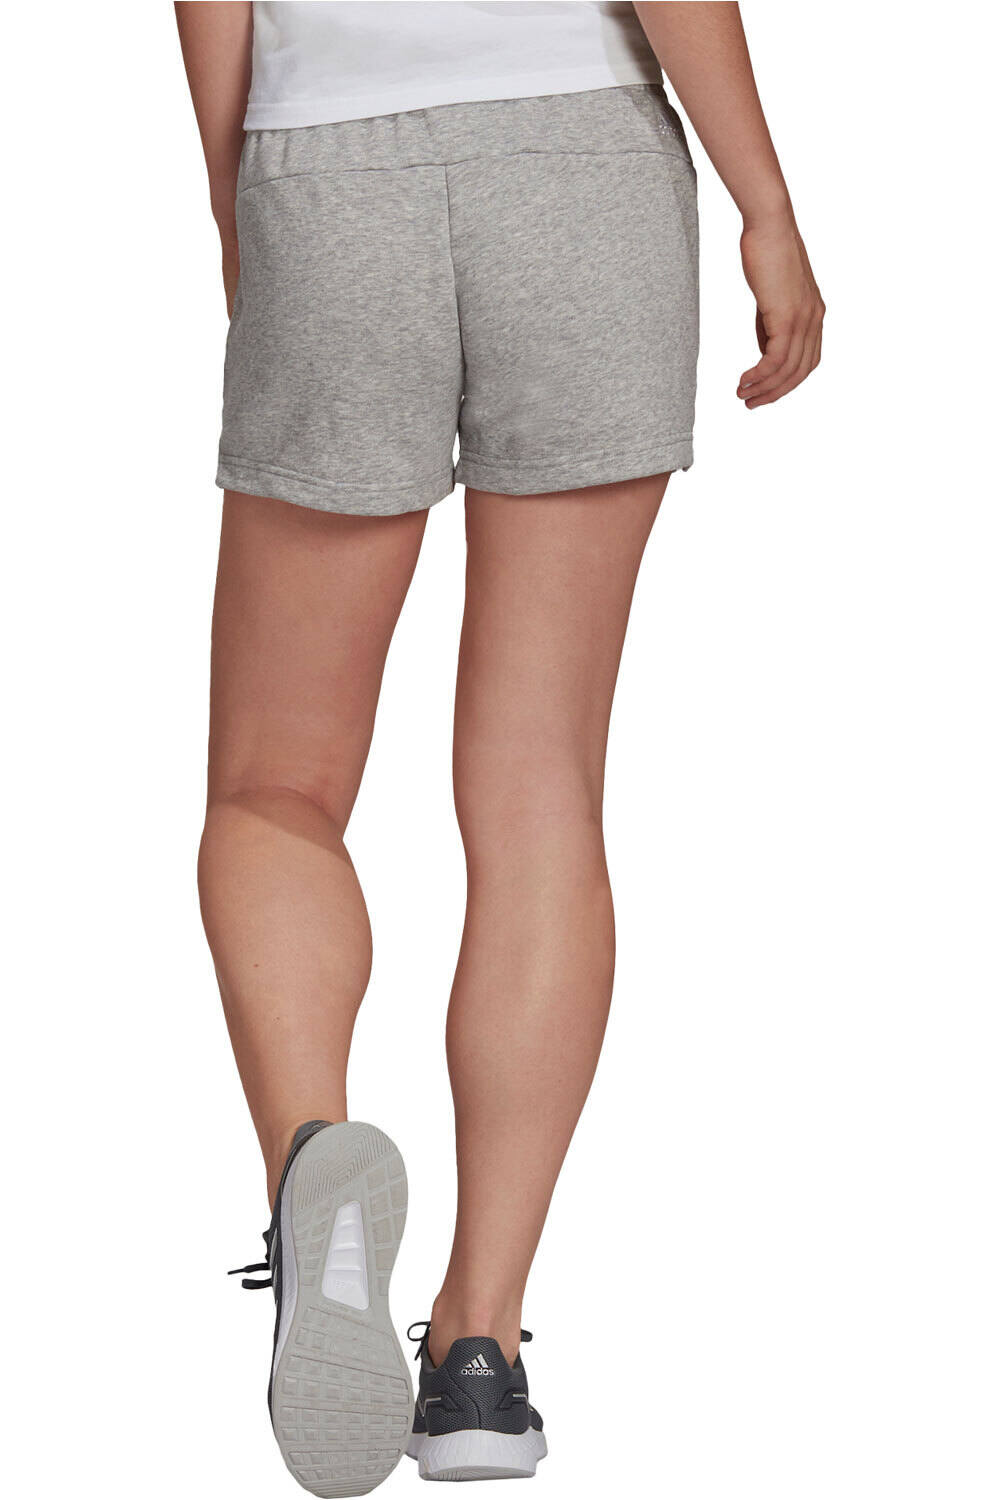 adidas pantalón corto deporte mujer Essentials Slim Logo vista trasera